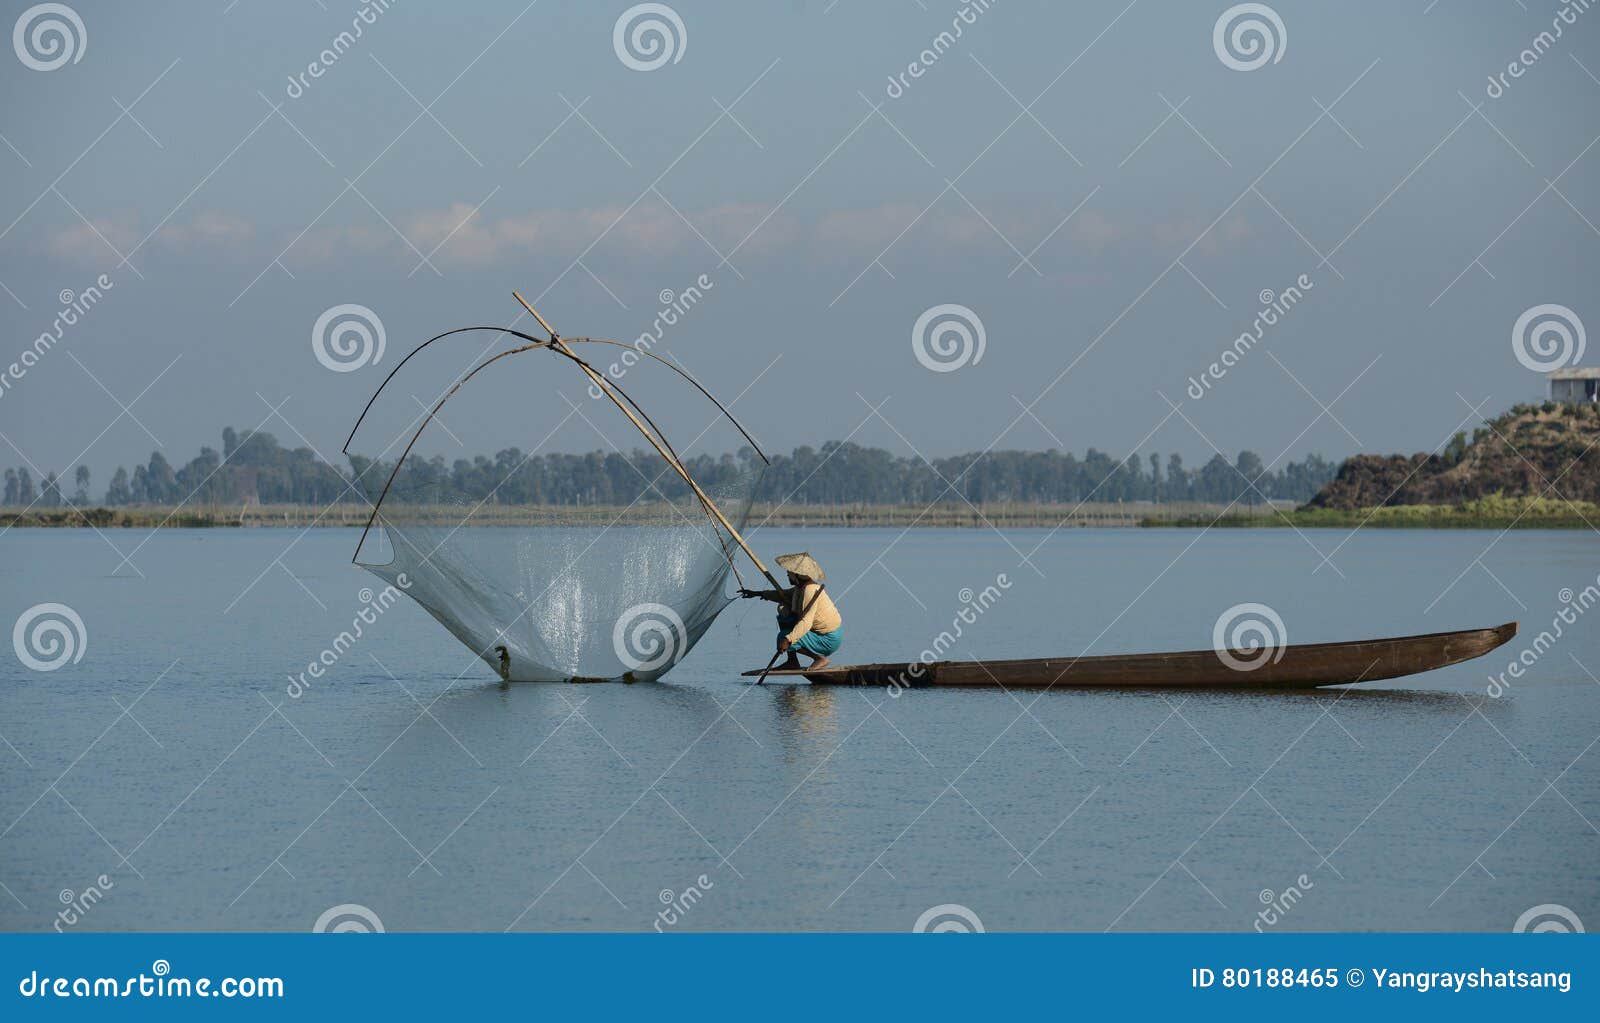 Old fashioned Fishing stock image. Image of pastime, asian - 80188465